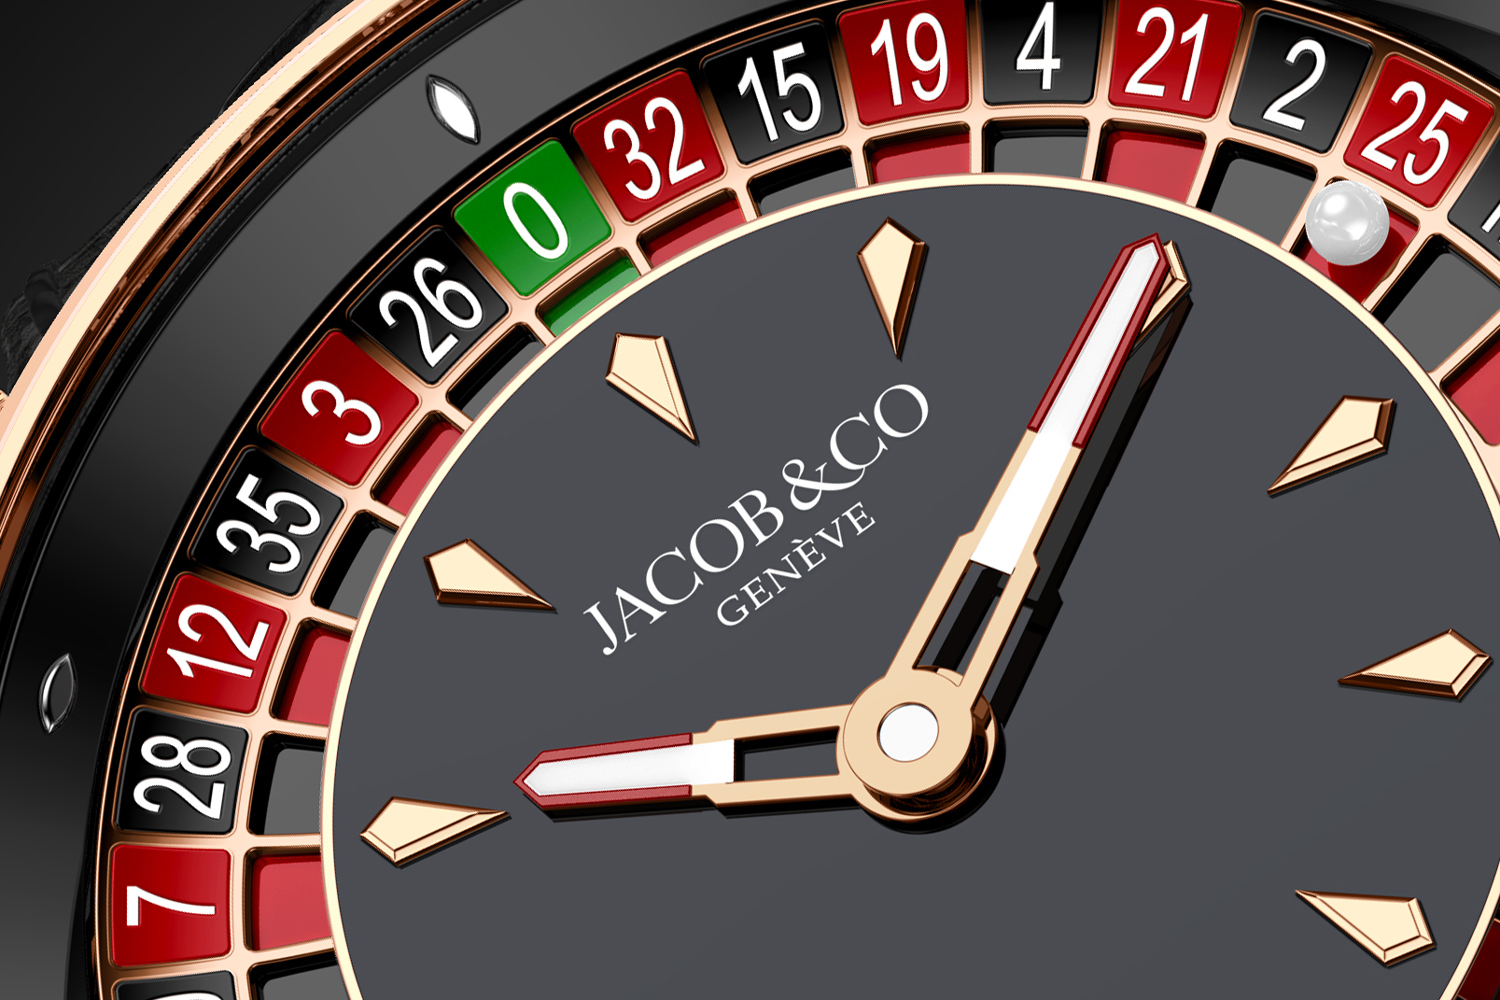 Jacob & Co. Casino Tourbillon